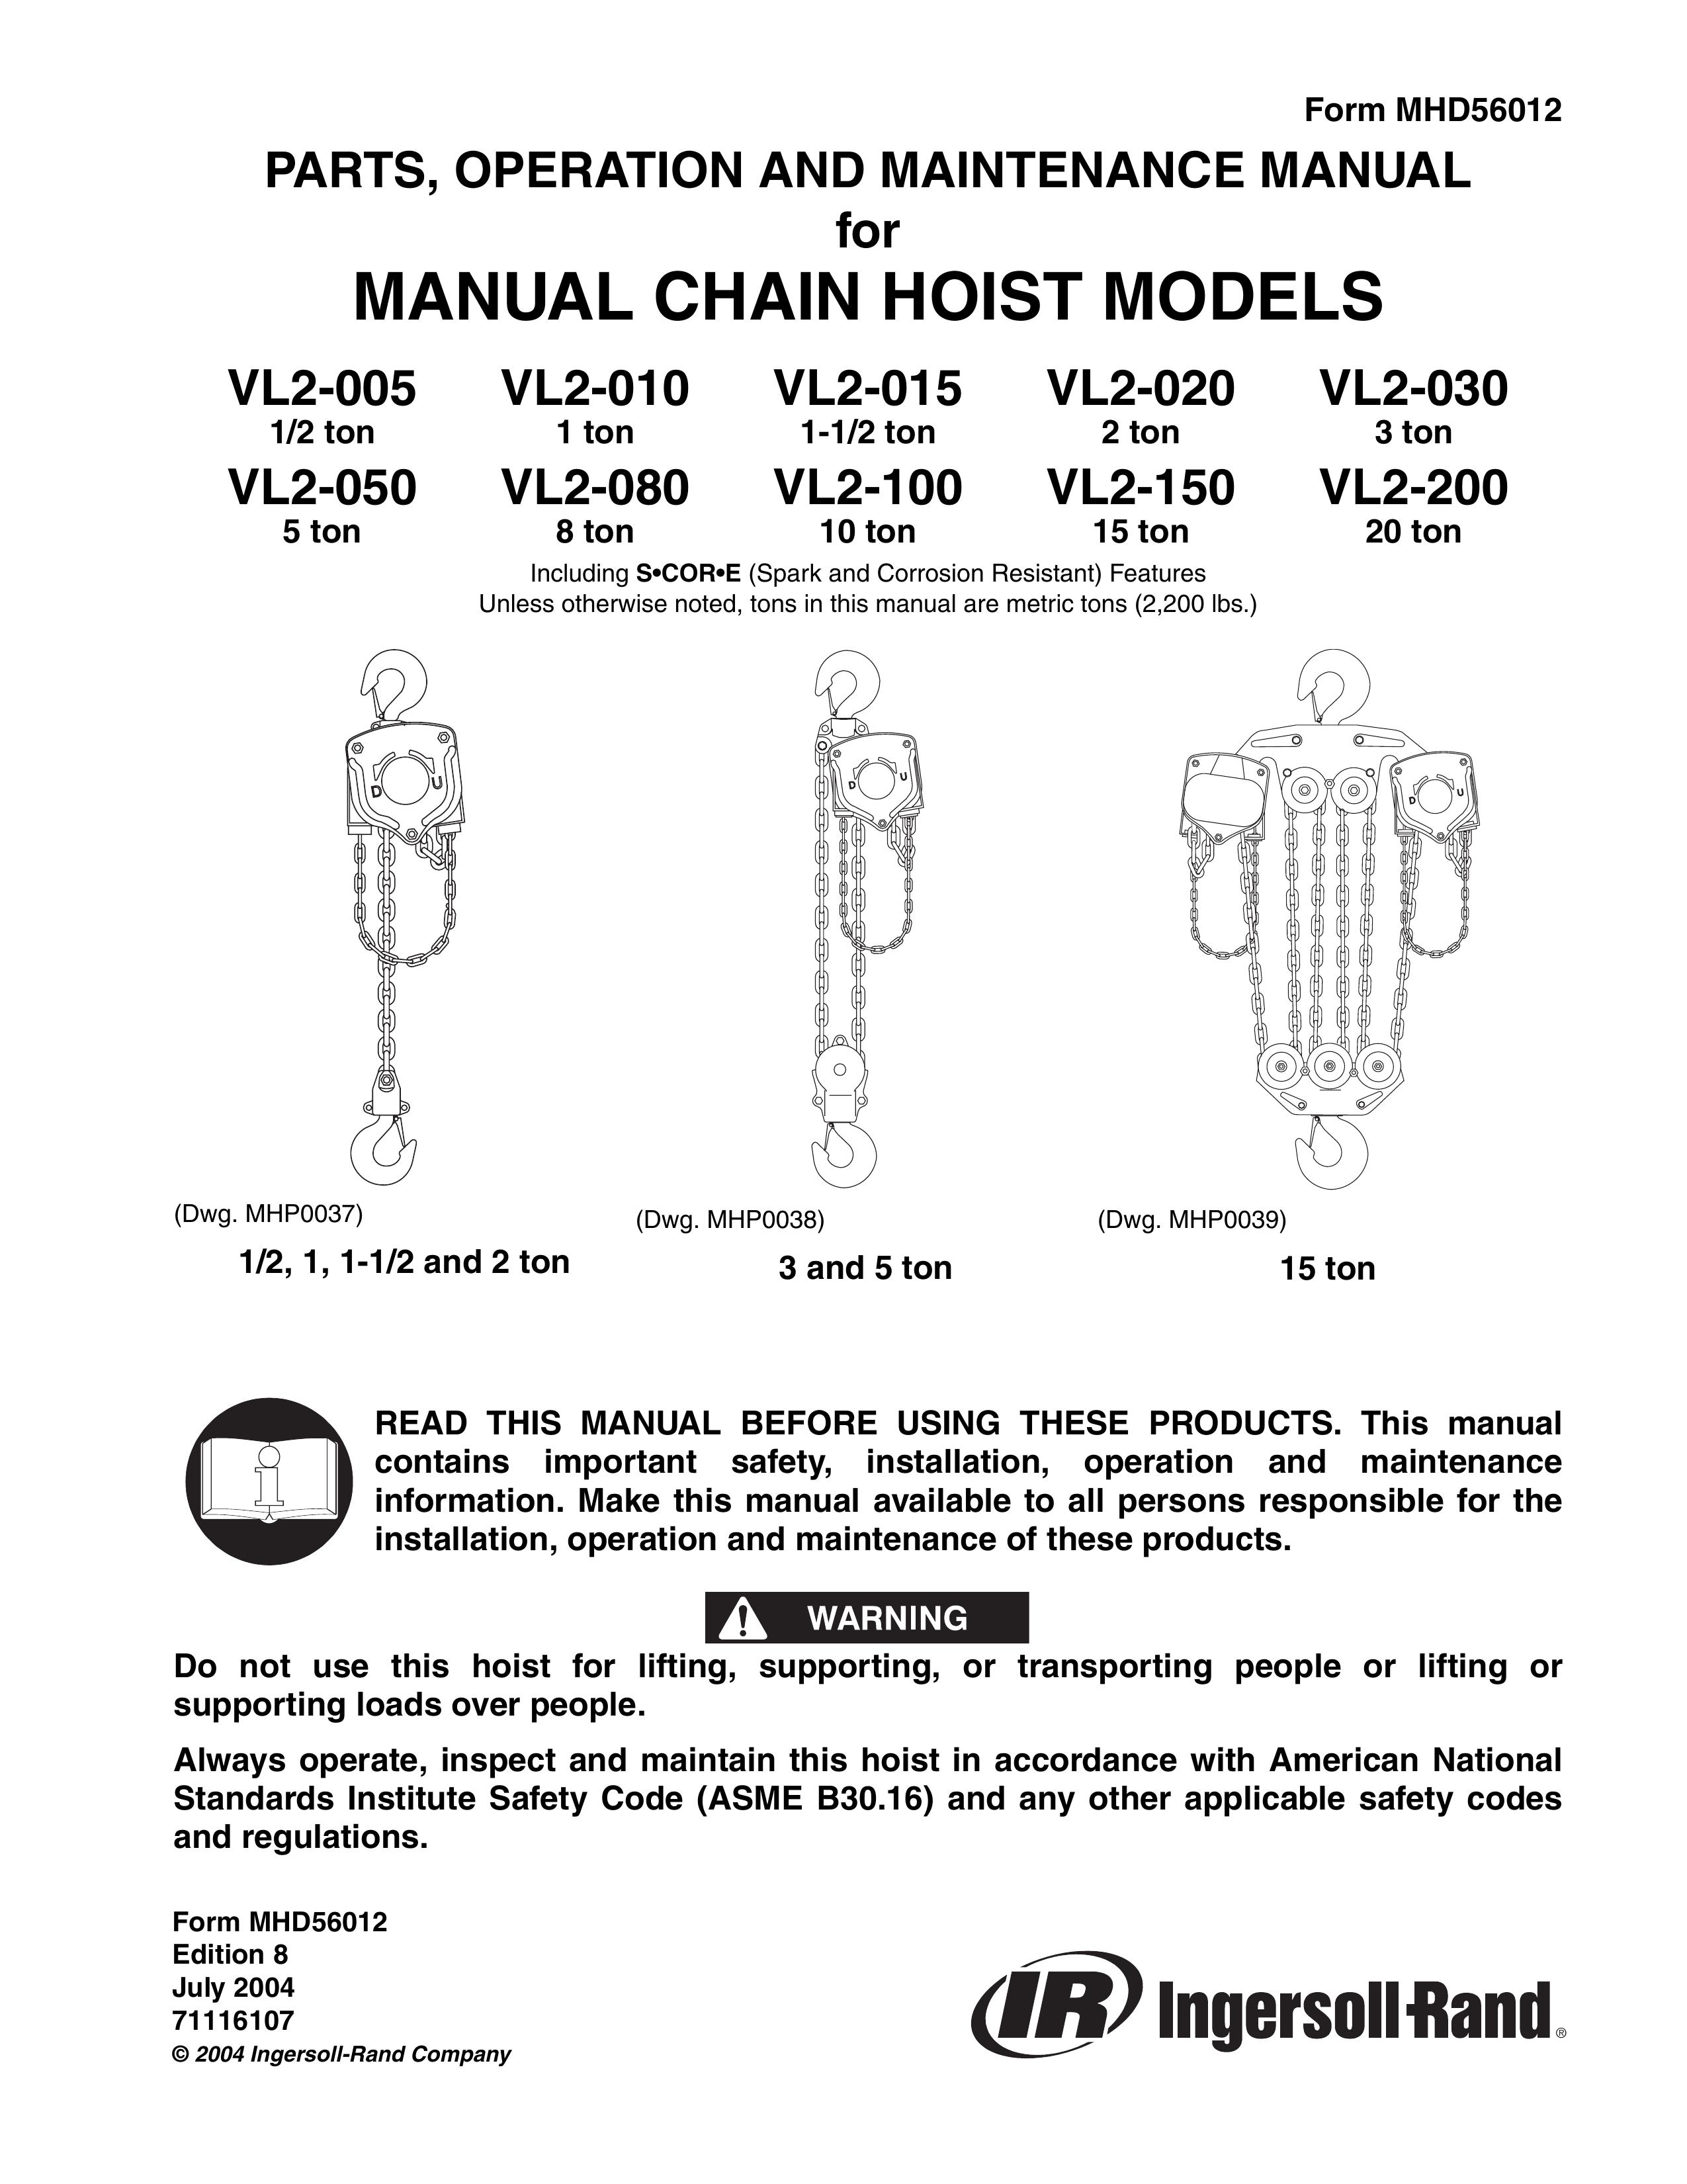 Ingersoll-Rand VL2-080 Digital Photo Keychain User Manual